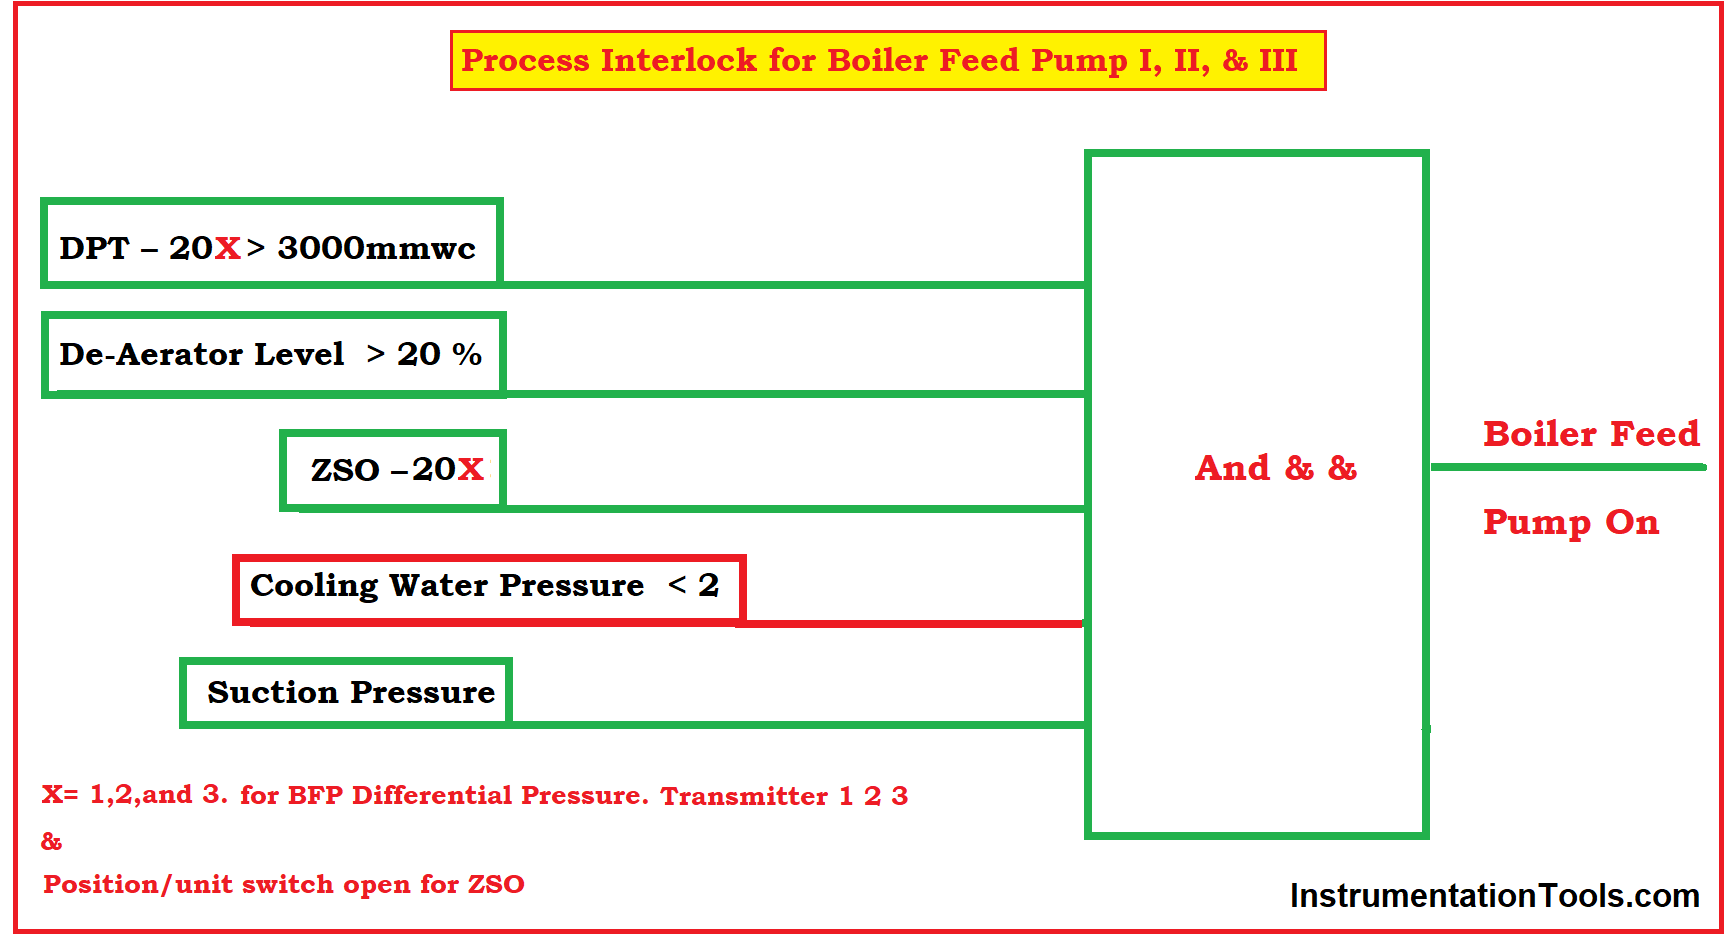 Process Interlock for Boiler Feed Pump I, II, & III